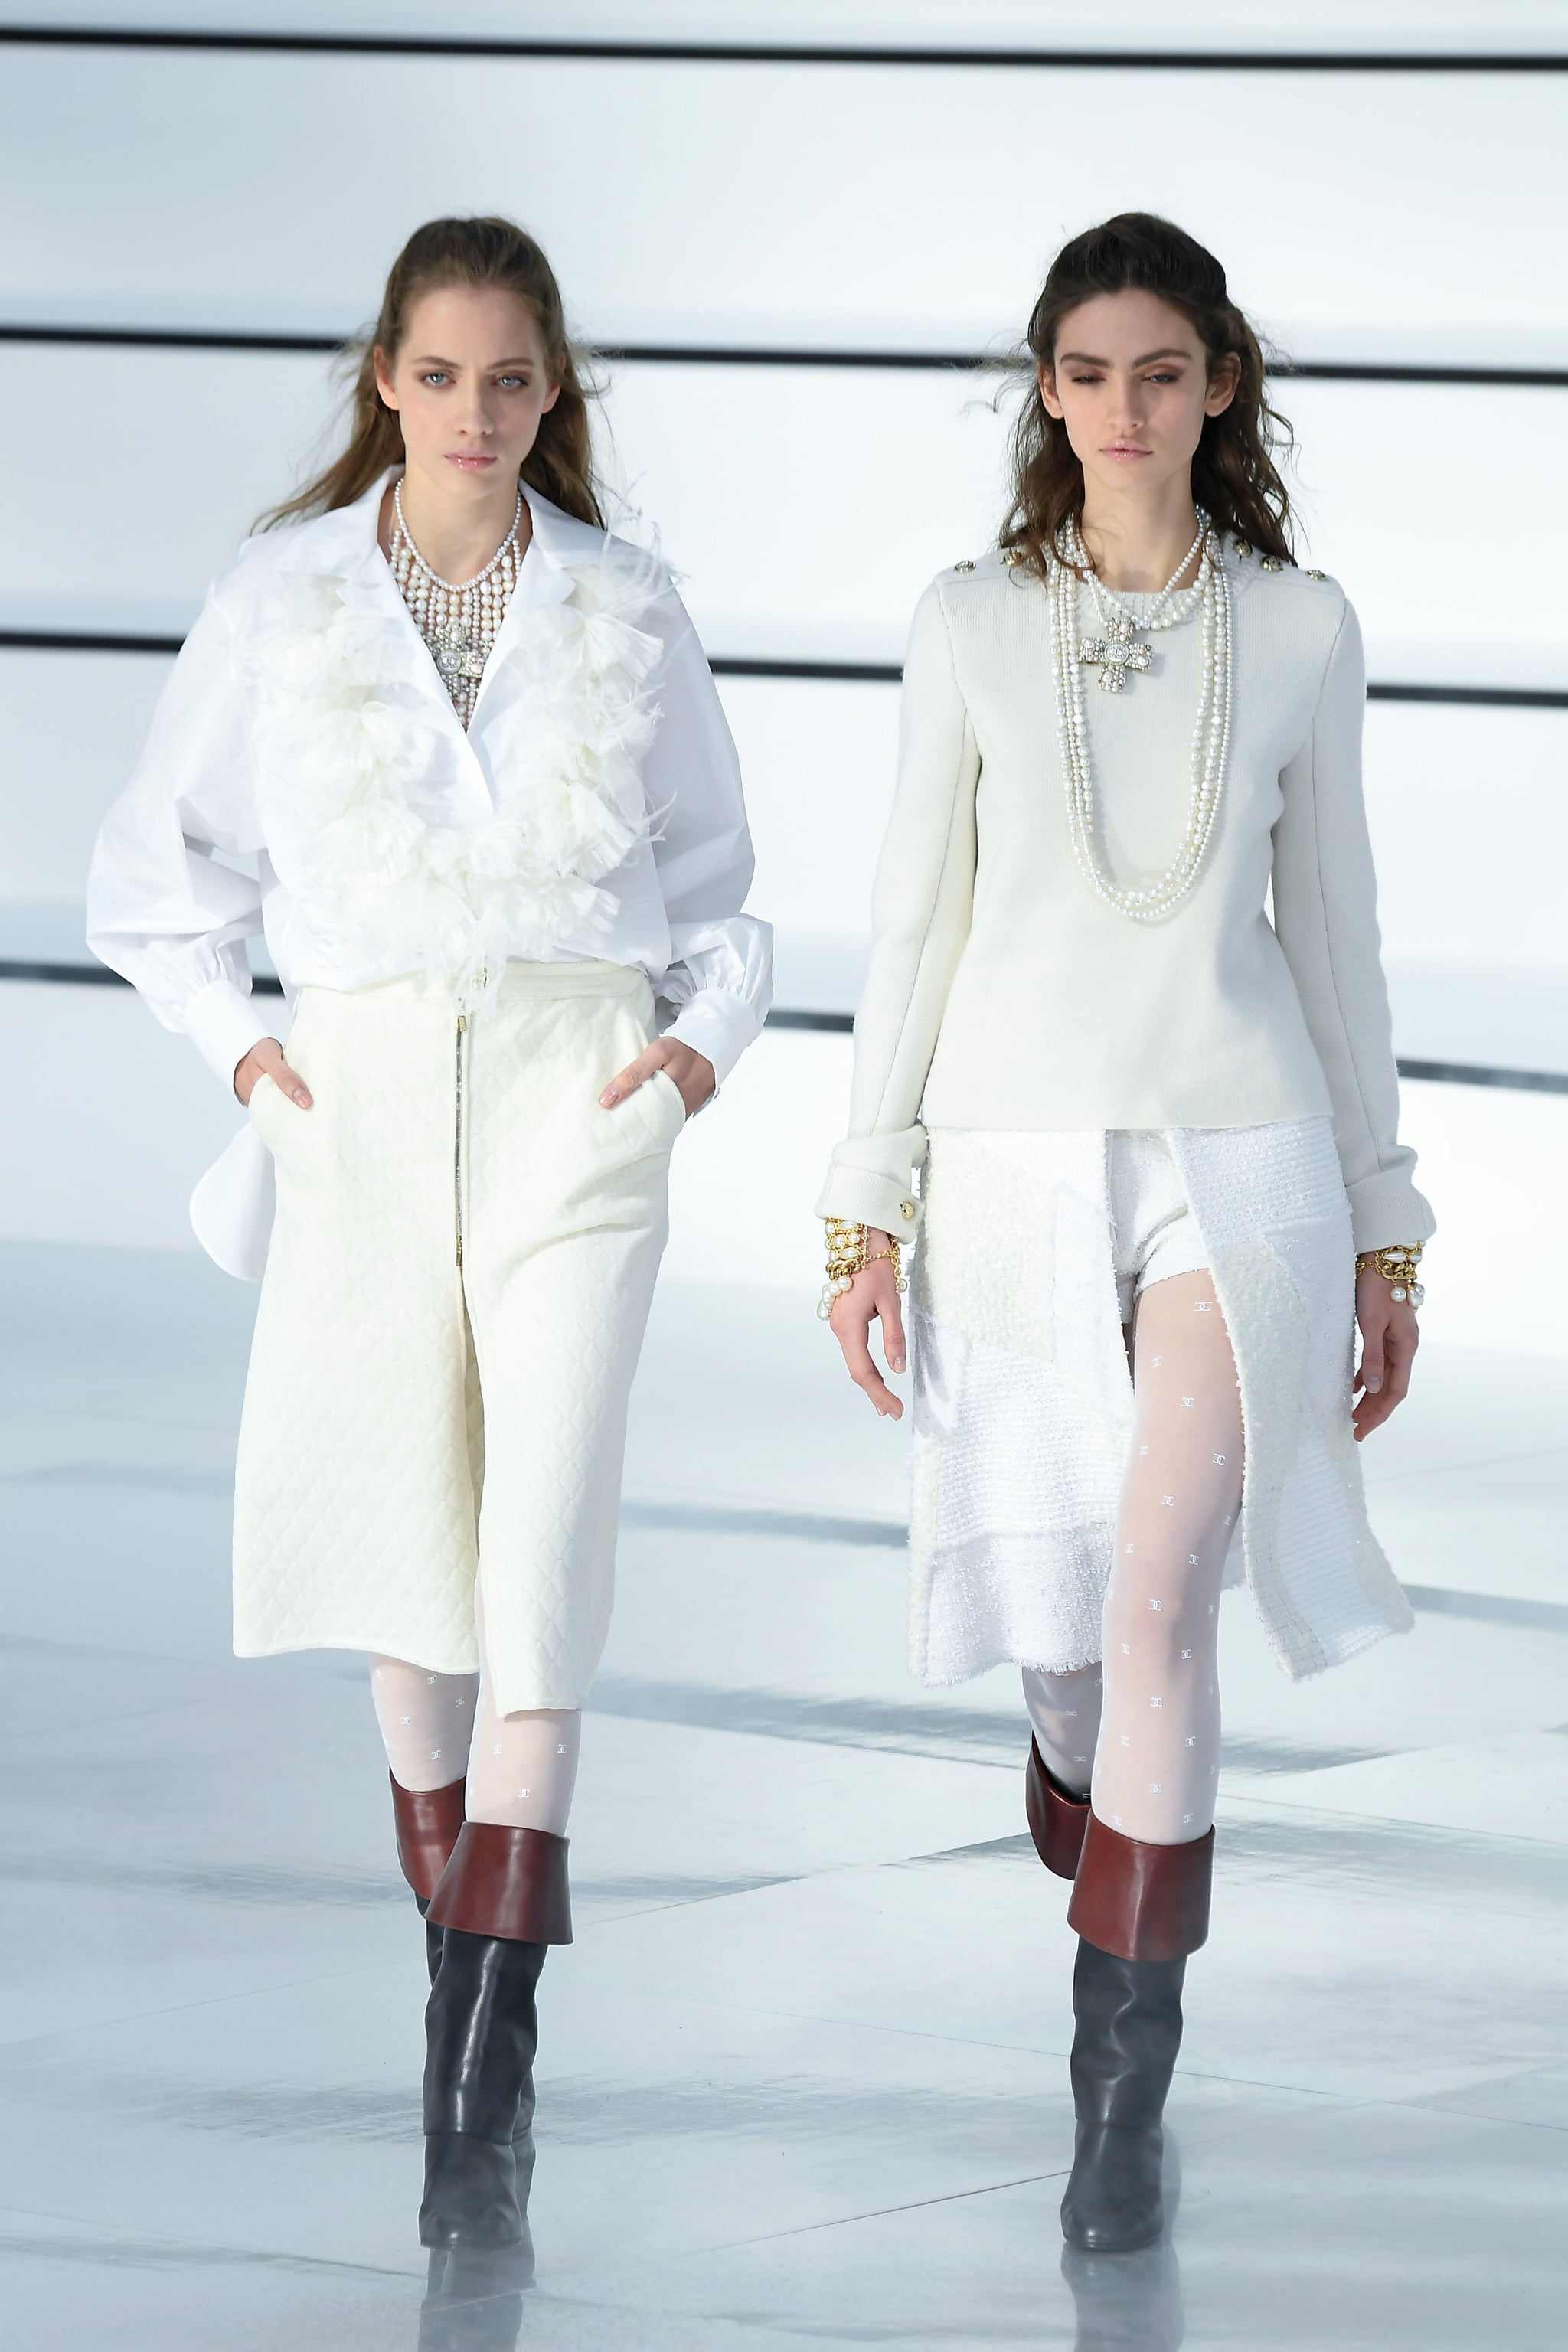 Chanel Fall/Winter 2020 Runway Show at Paris Fashion Week